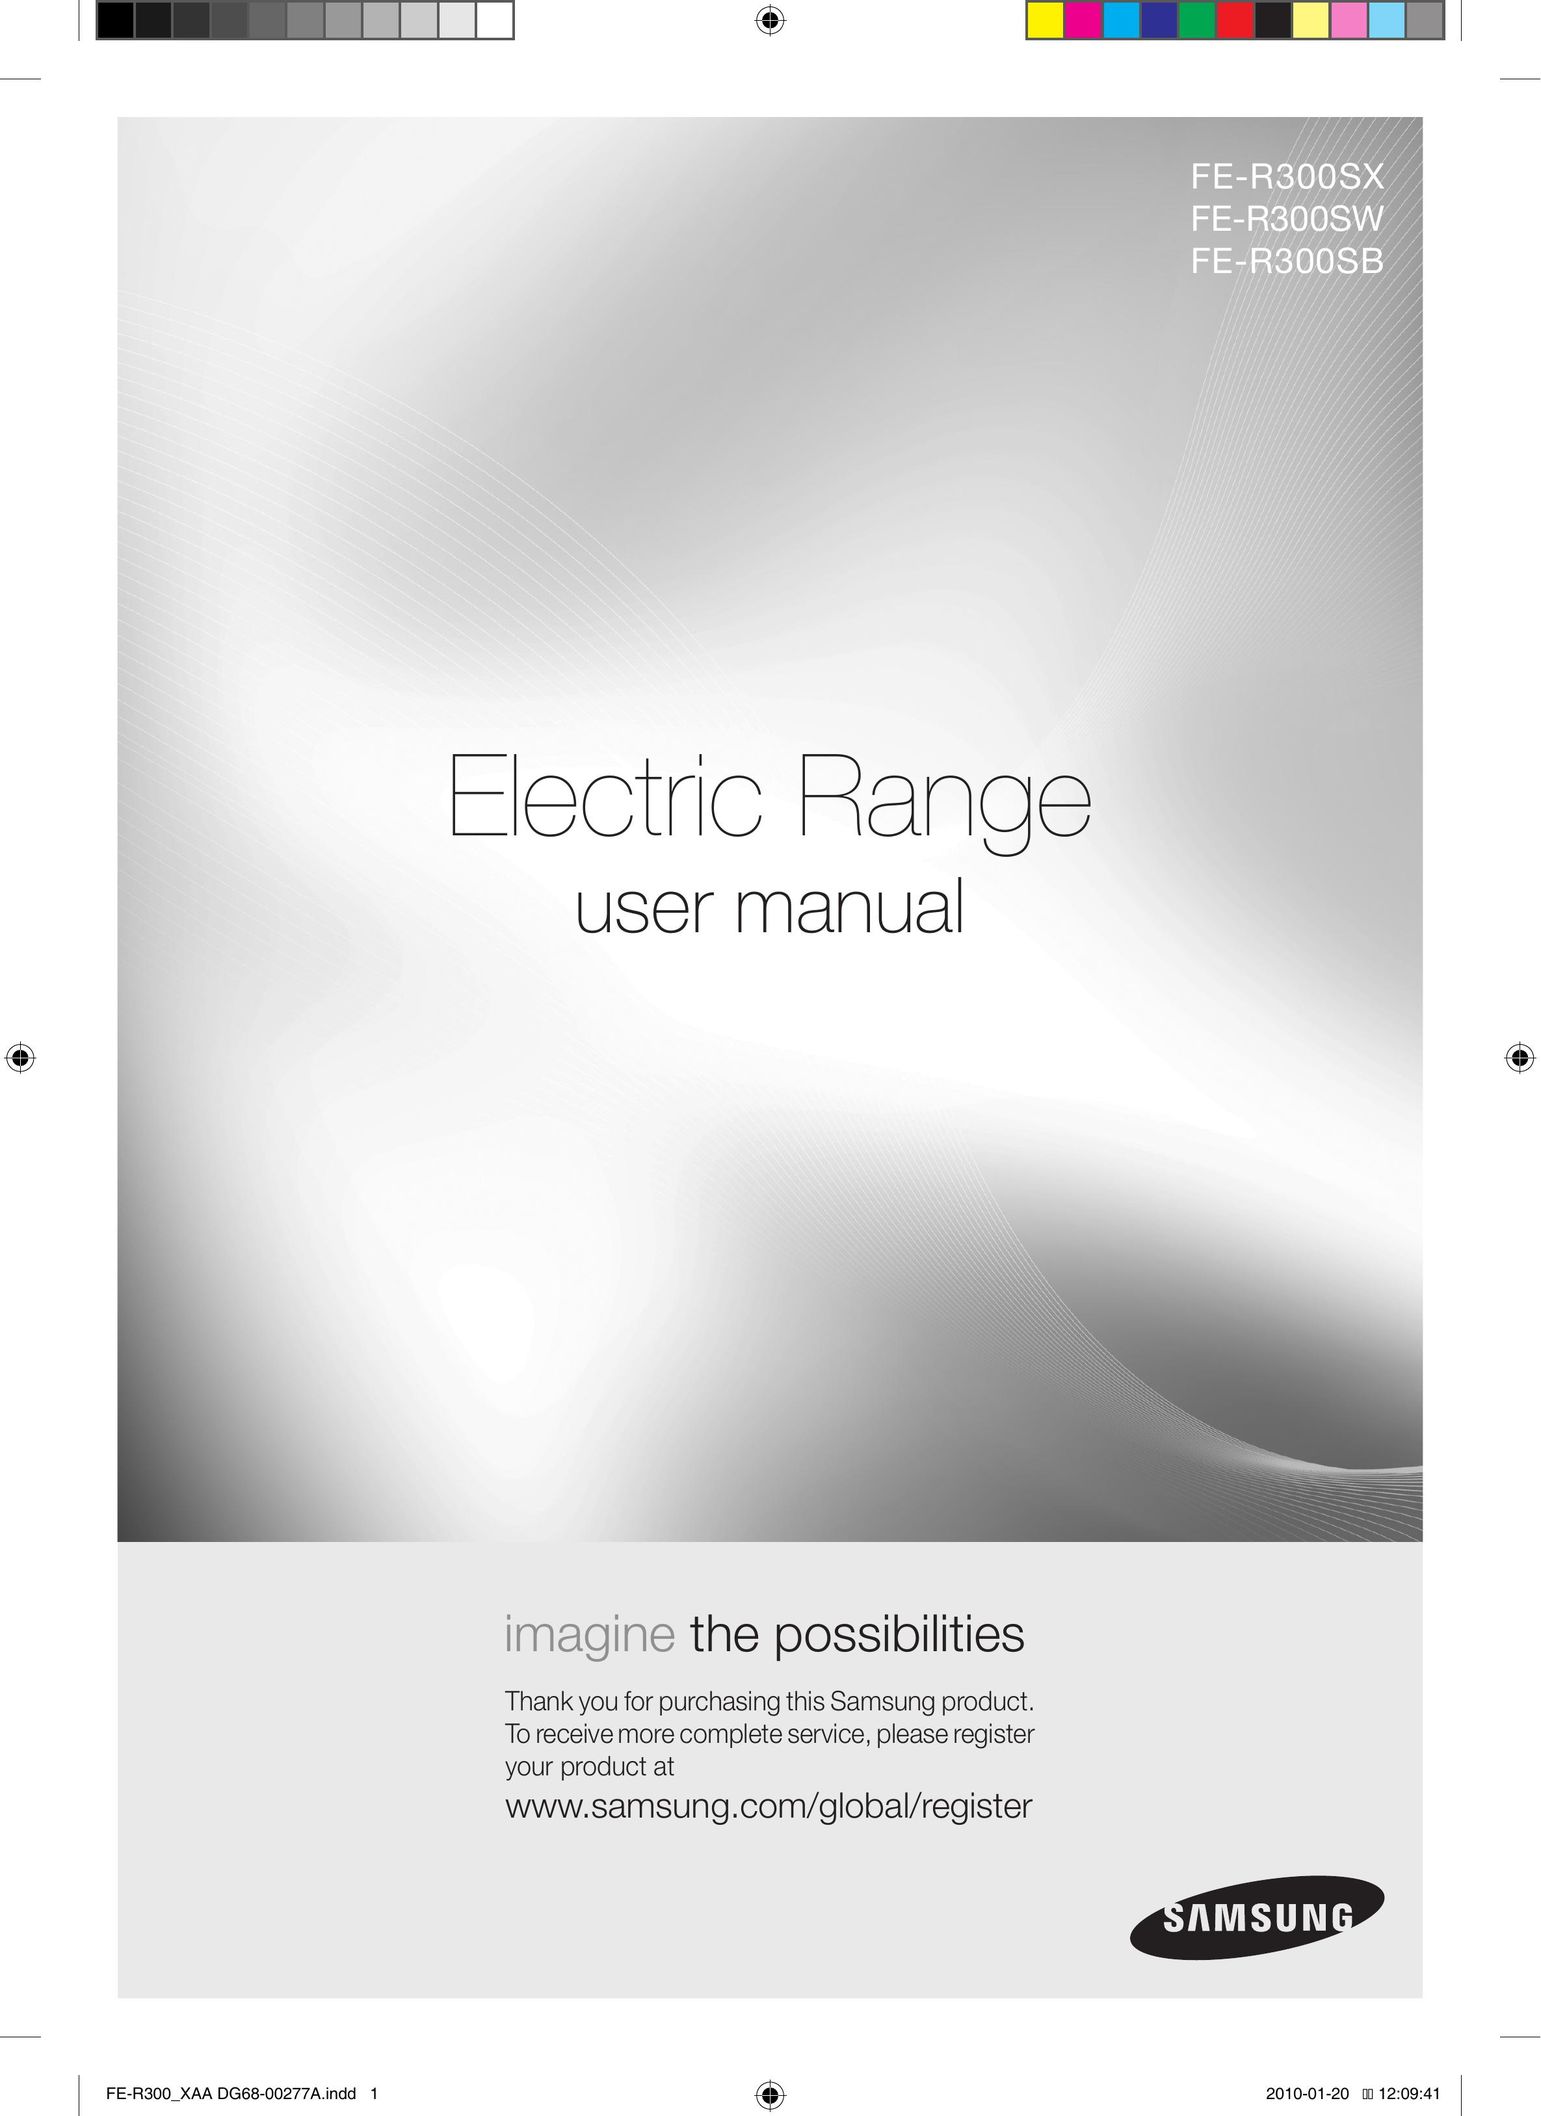 Samsung FE-R300SX Range User Manual